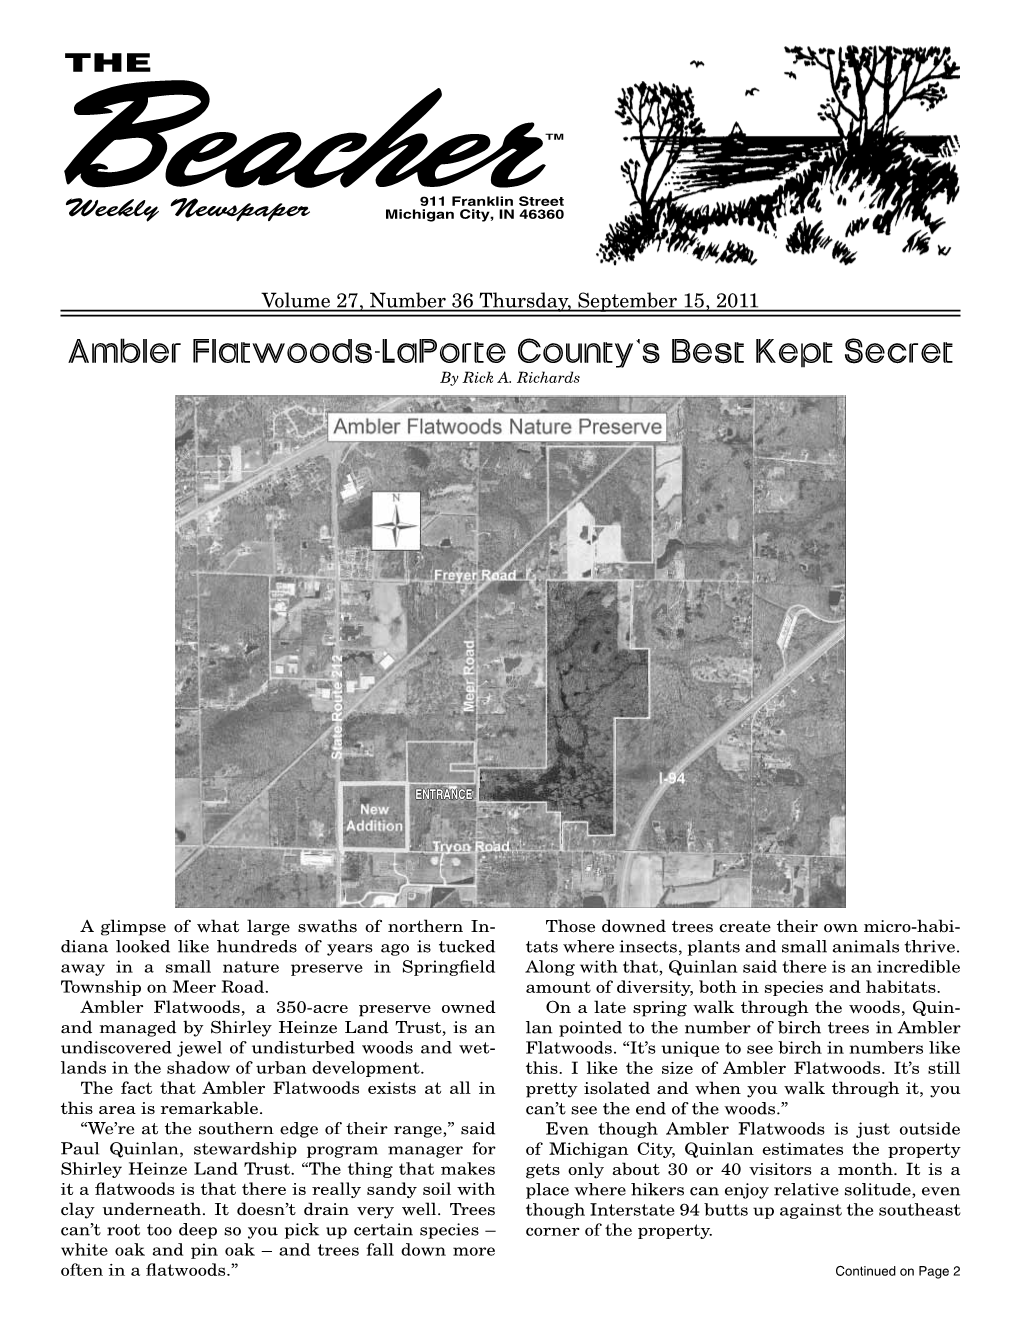 Ambler Flatwoods-Laporte County's Best Kept Secret